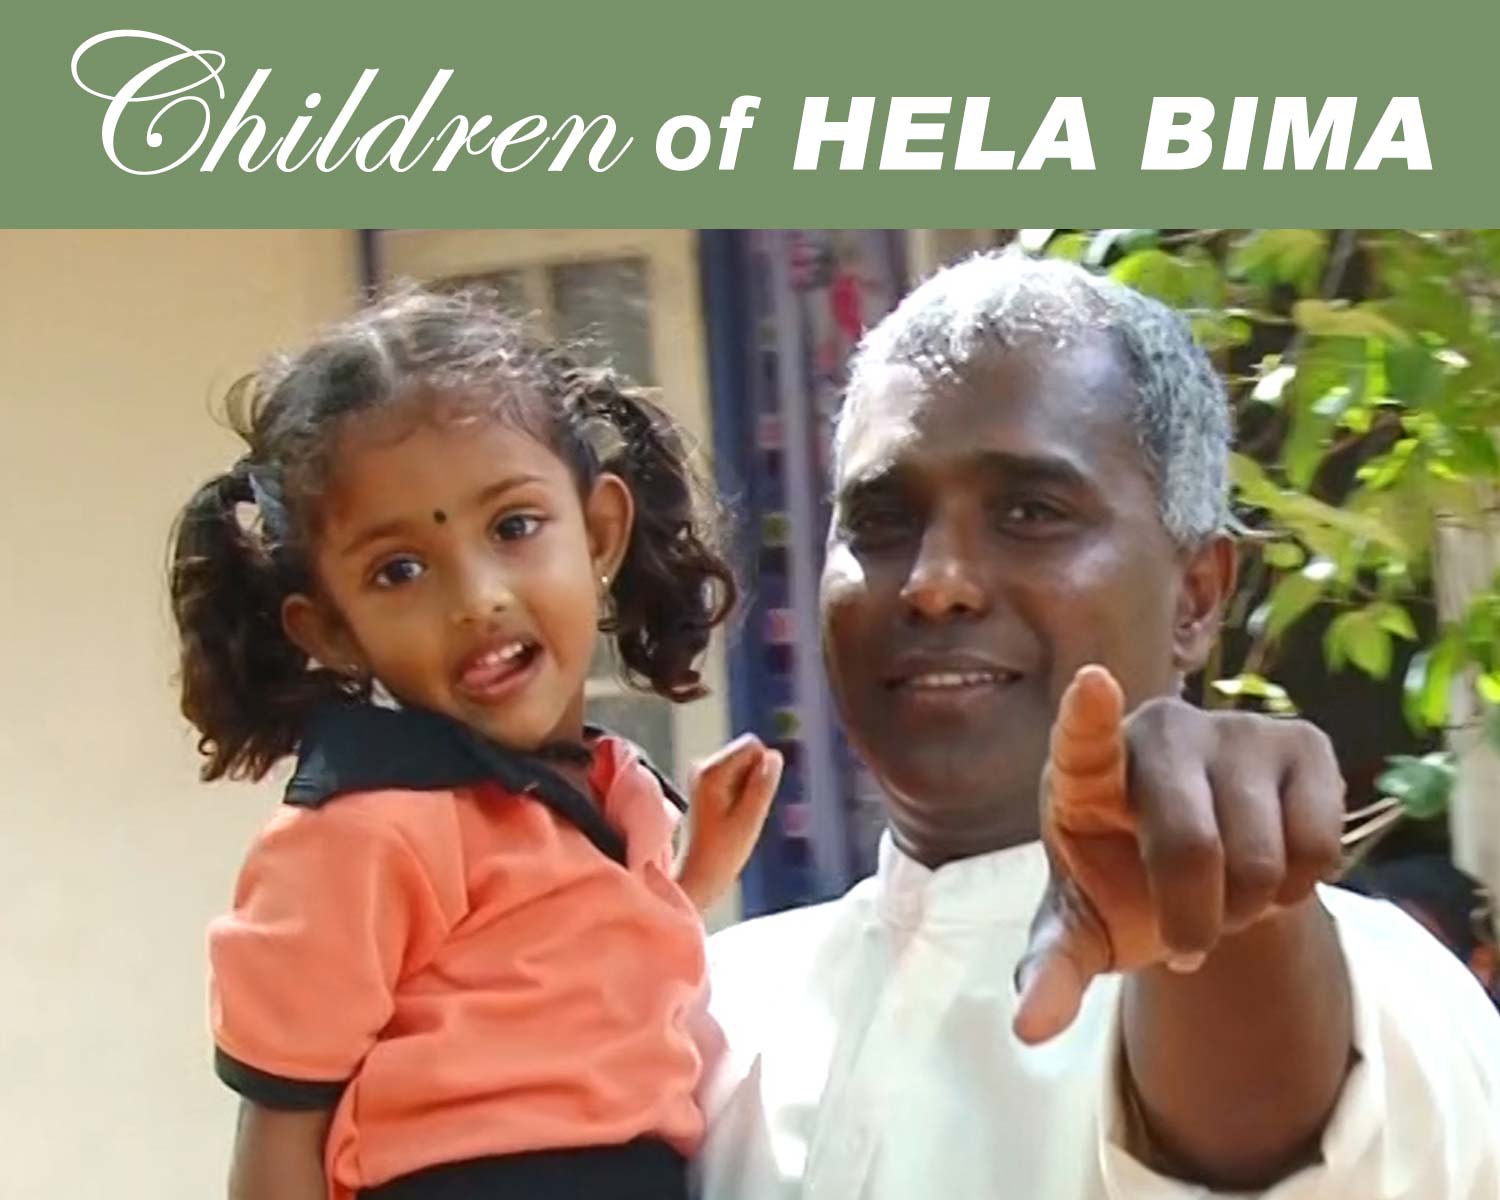 Children of Hela Bima